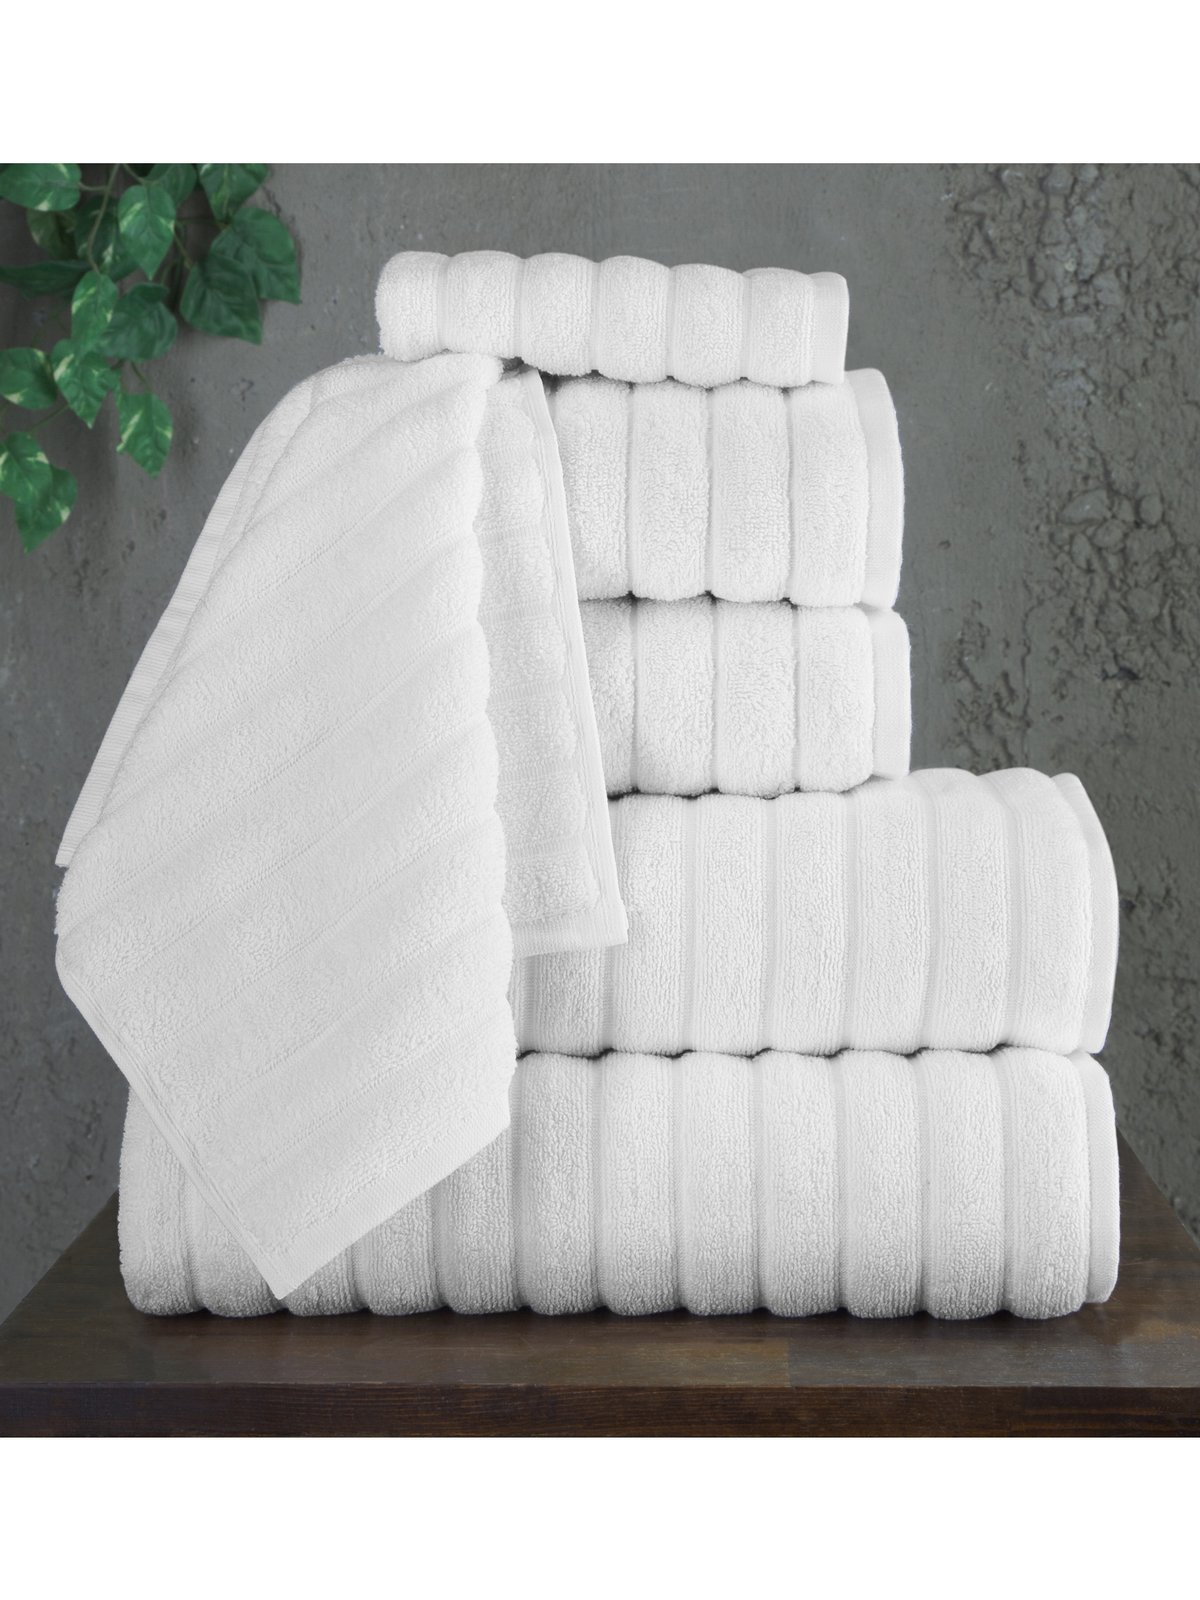 https://images.verishop.com/classic-turkish-towels-classic-turkish-towels-genuine-cotton-soft-absorbent-shimmer-brampton-6-piece-set-with-2-bath-towels-2-hand-towels-2-washcloths/M00651046288633-2569198339?auto=format&cs=strip&fit=max&w=1200